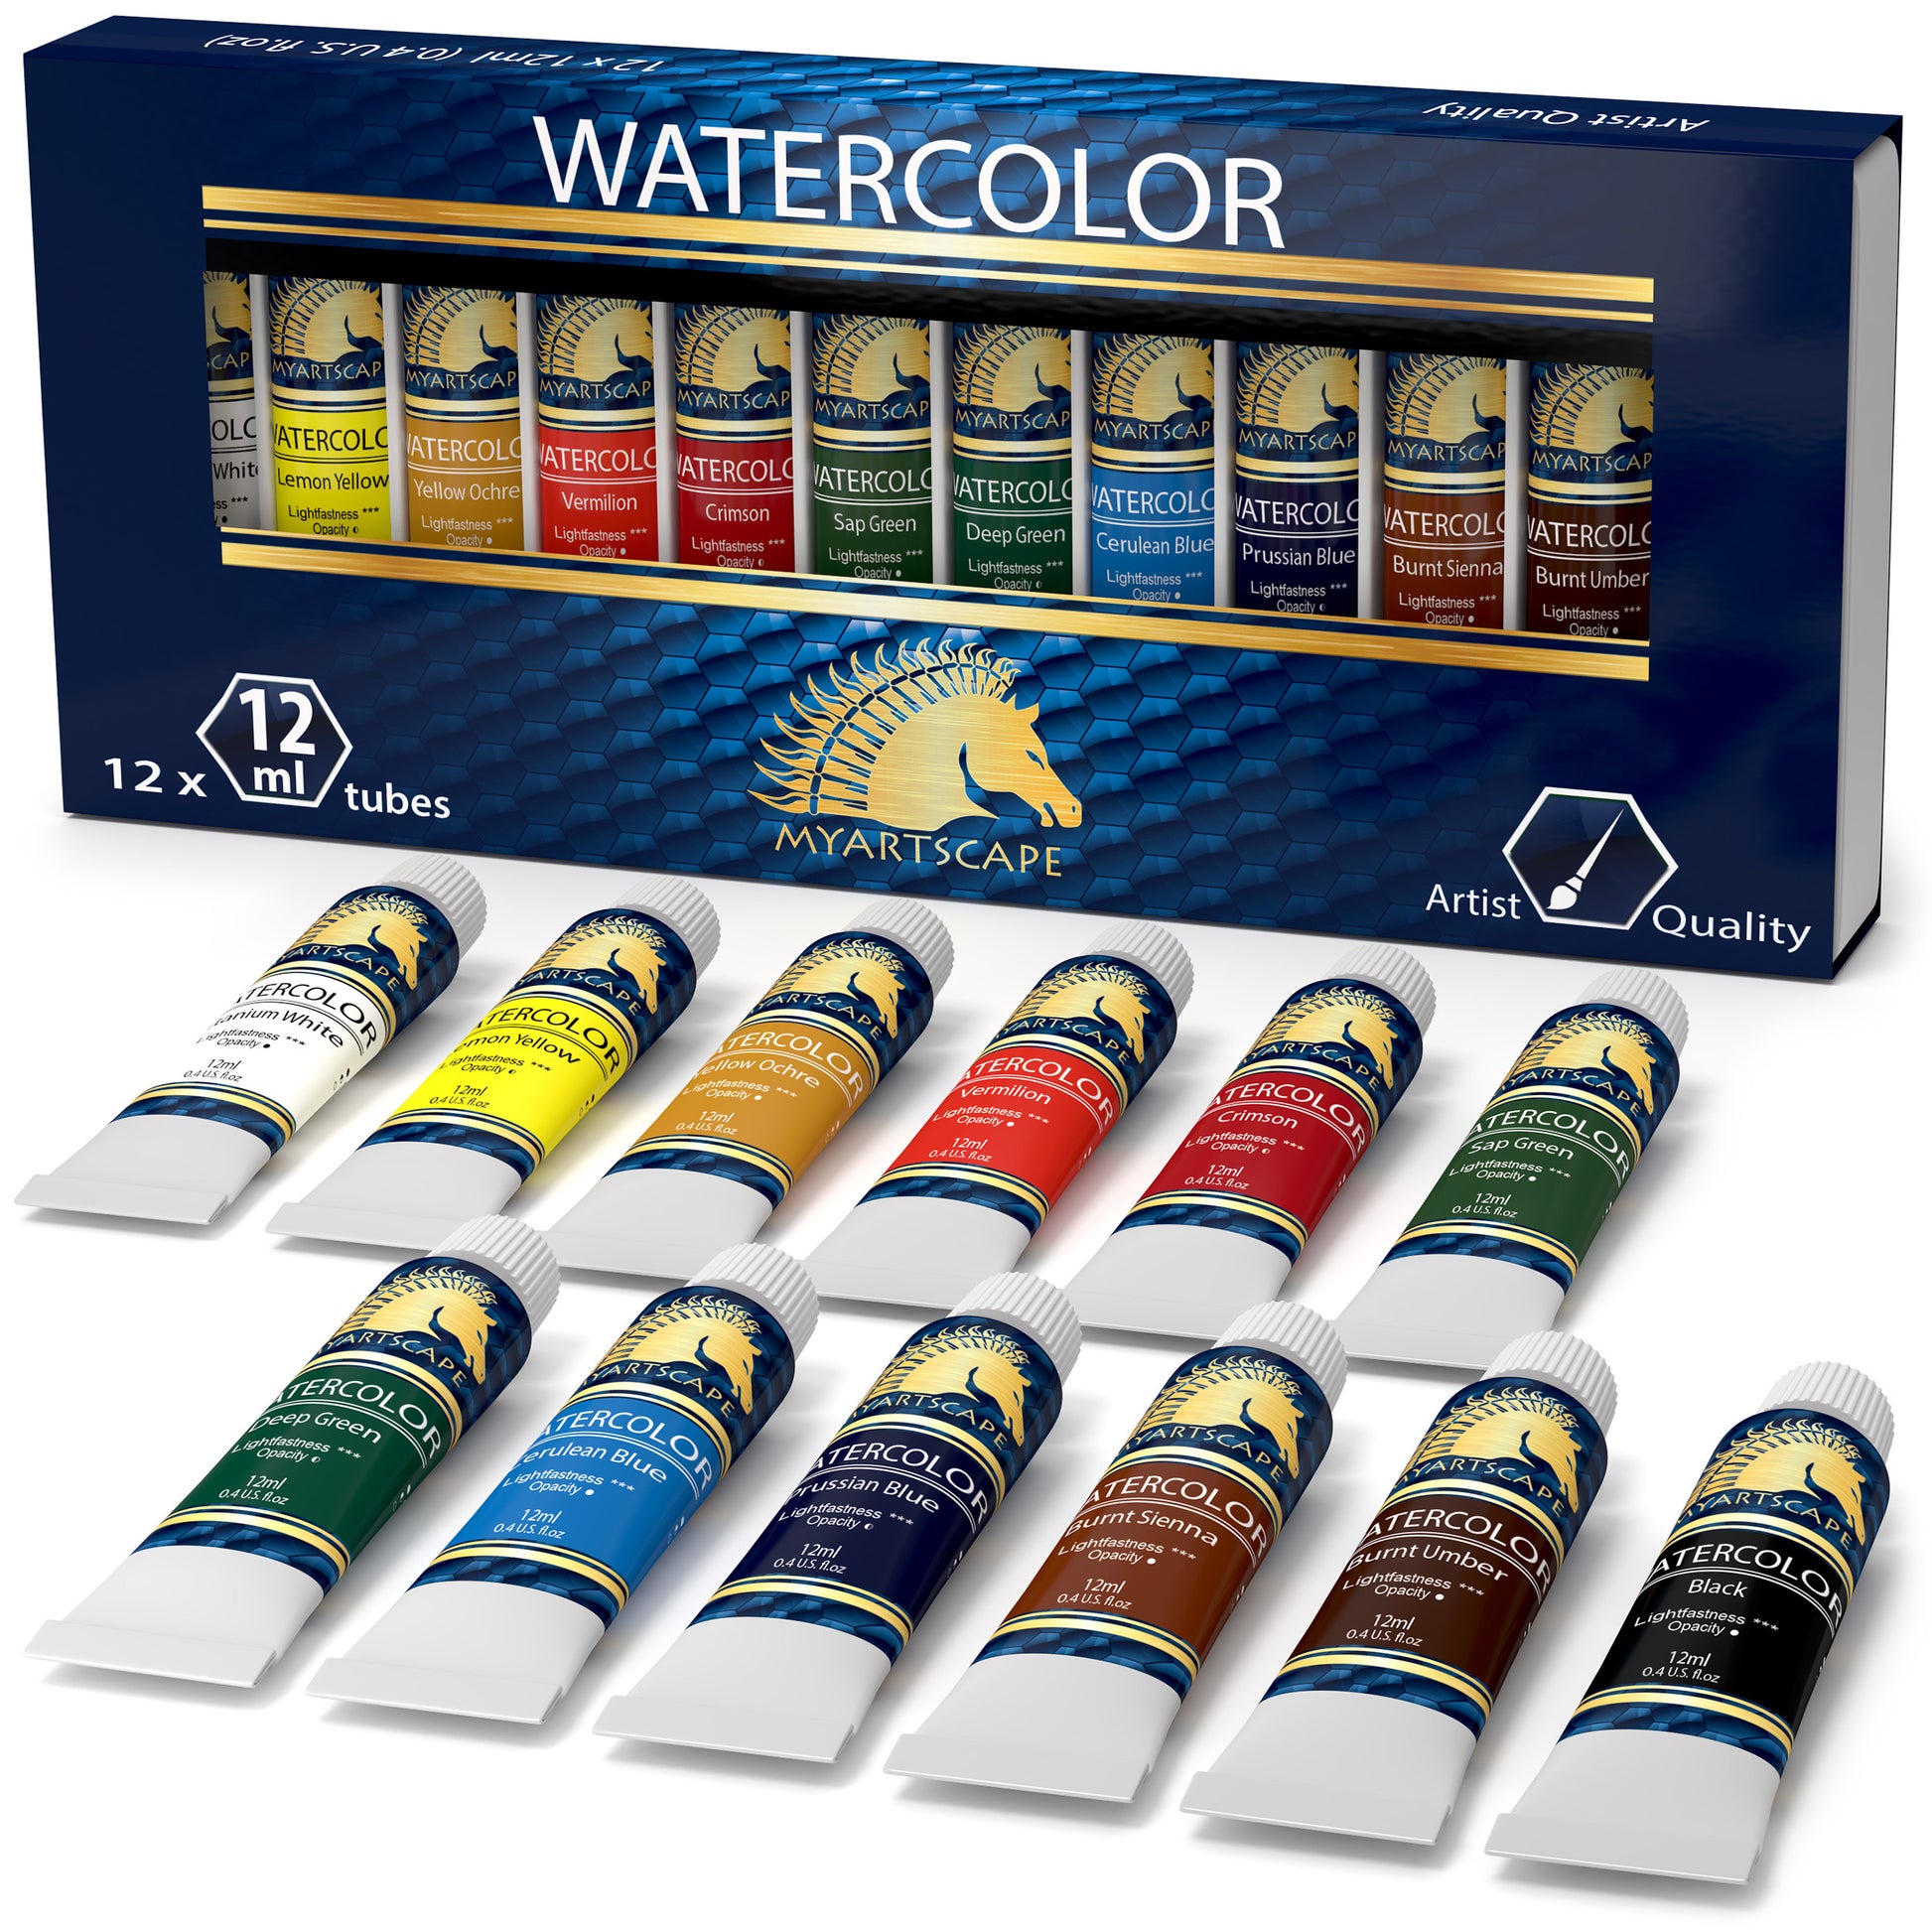 U.S. Art Supply 48 Piece Watercolor Artist Grade Water Soluble